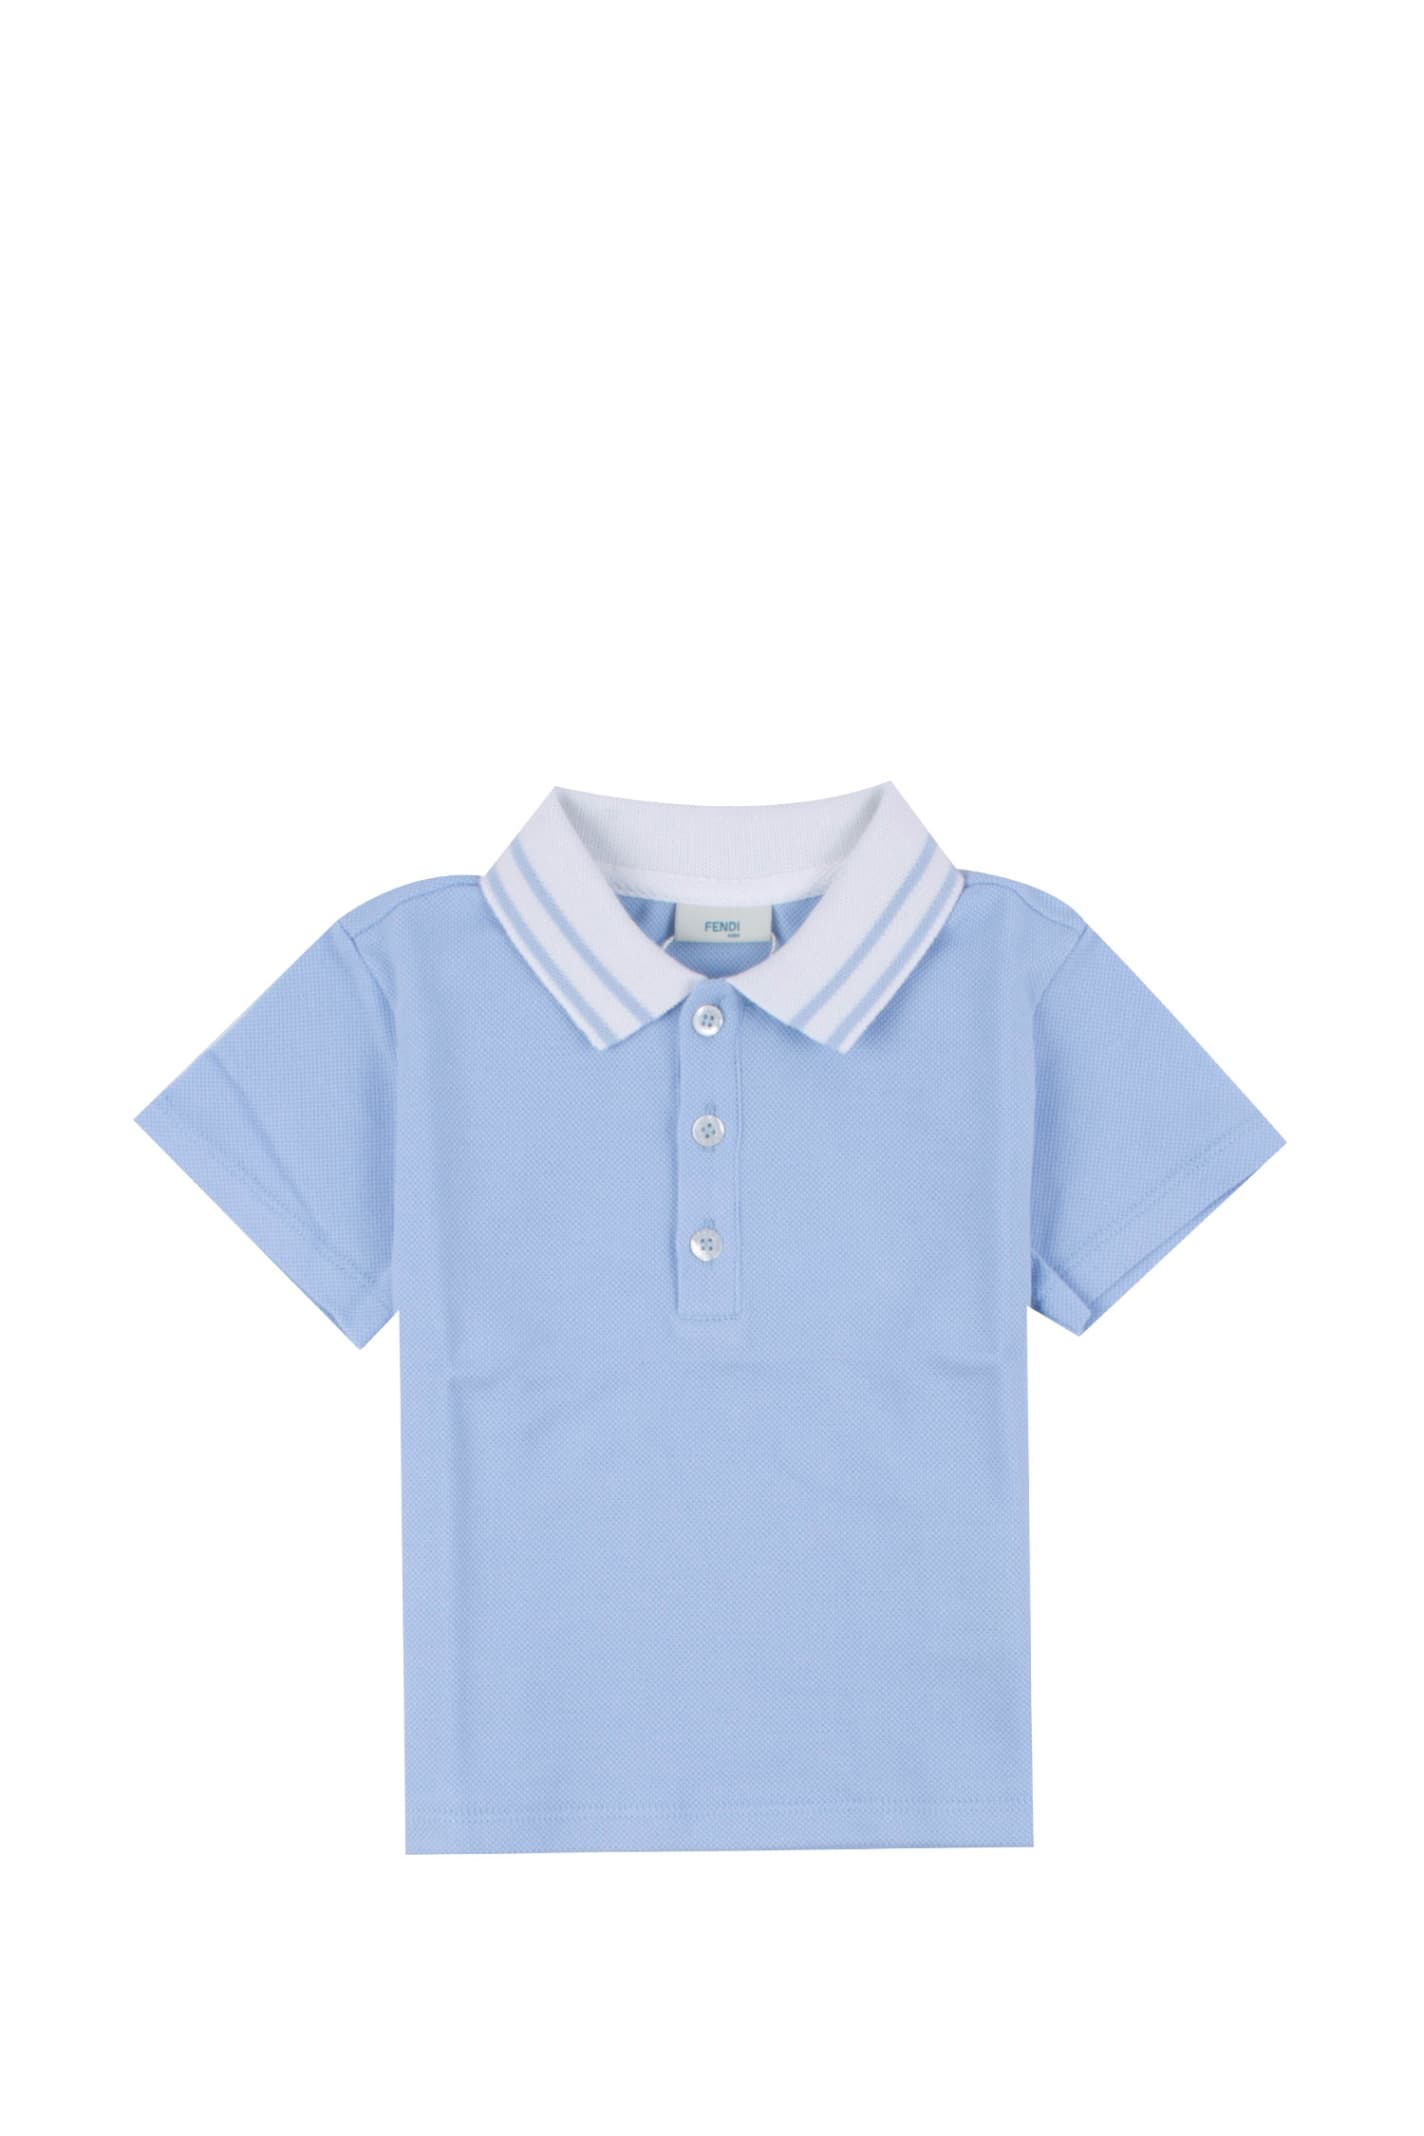 Fendi Cotton Polo Shirt